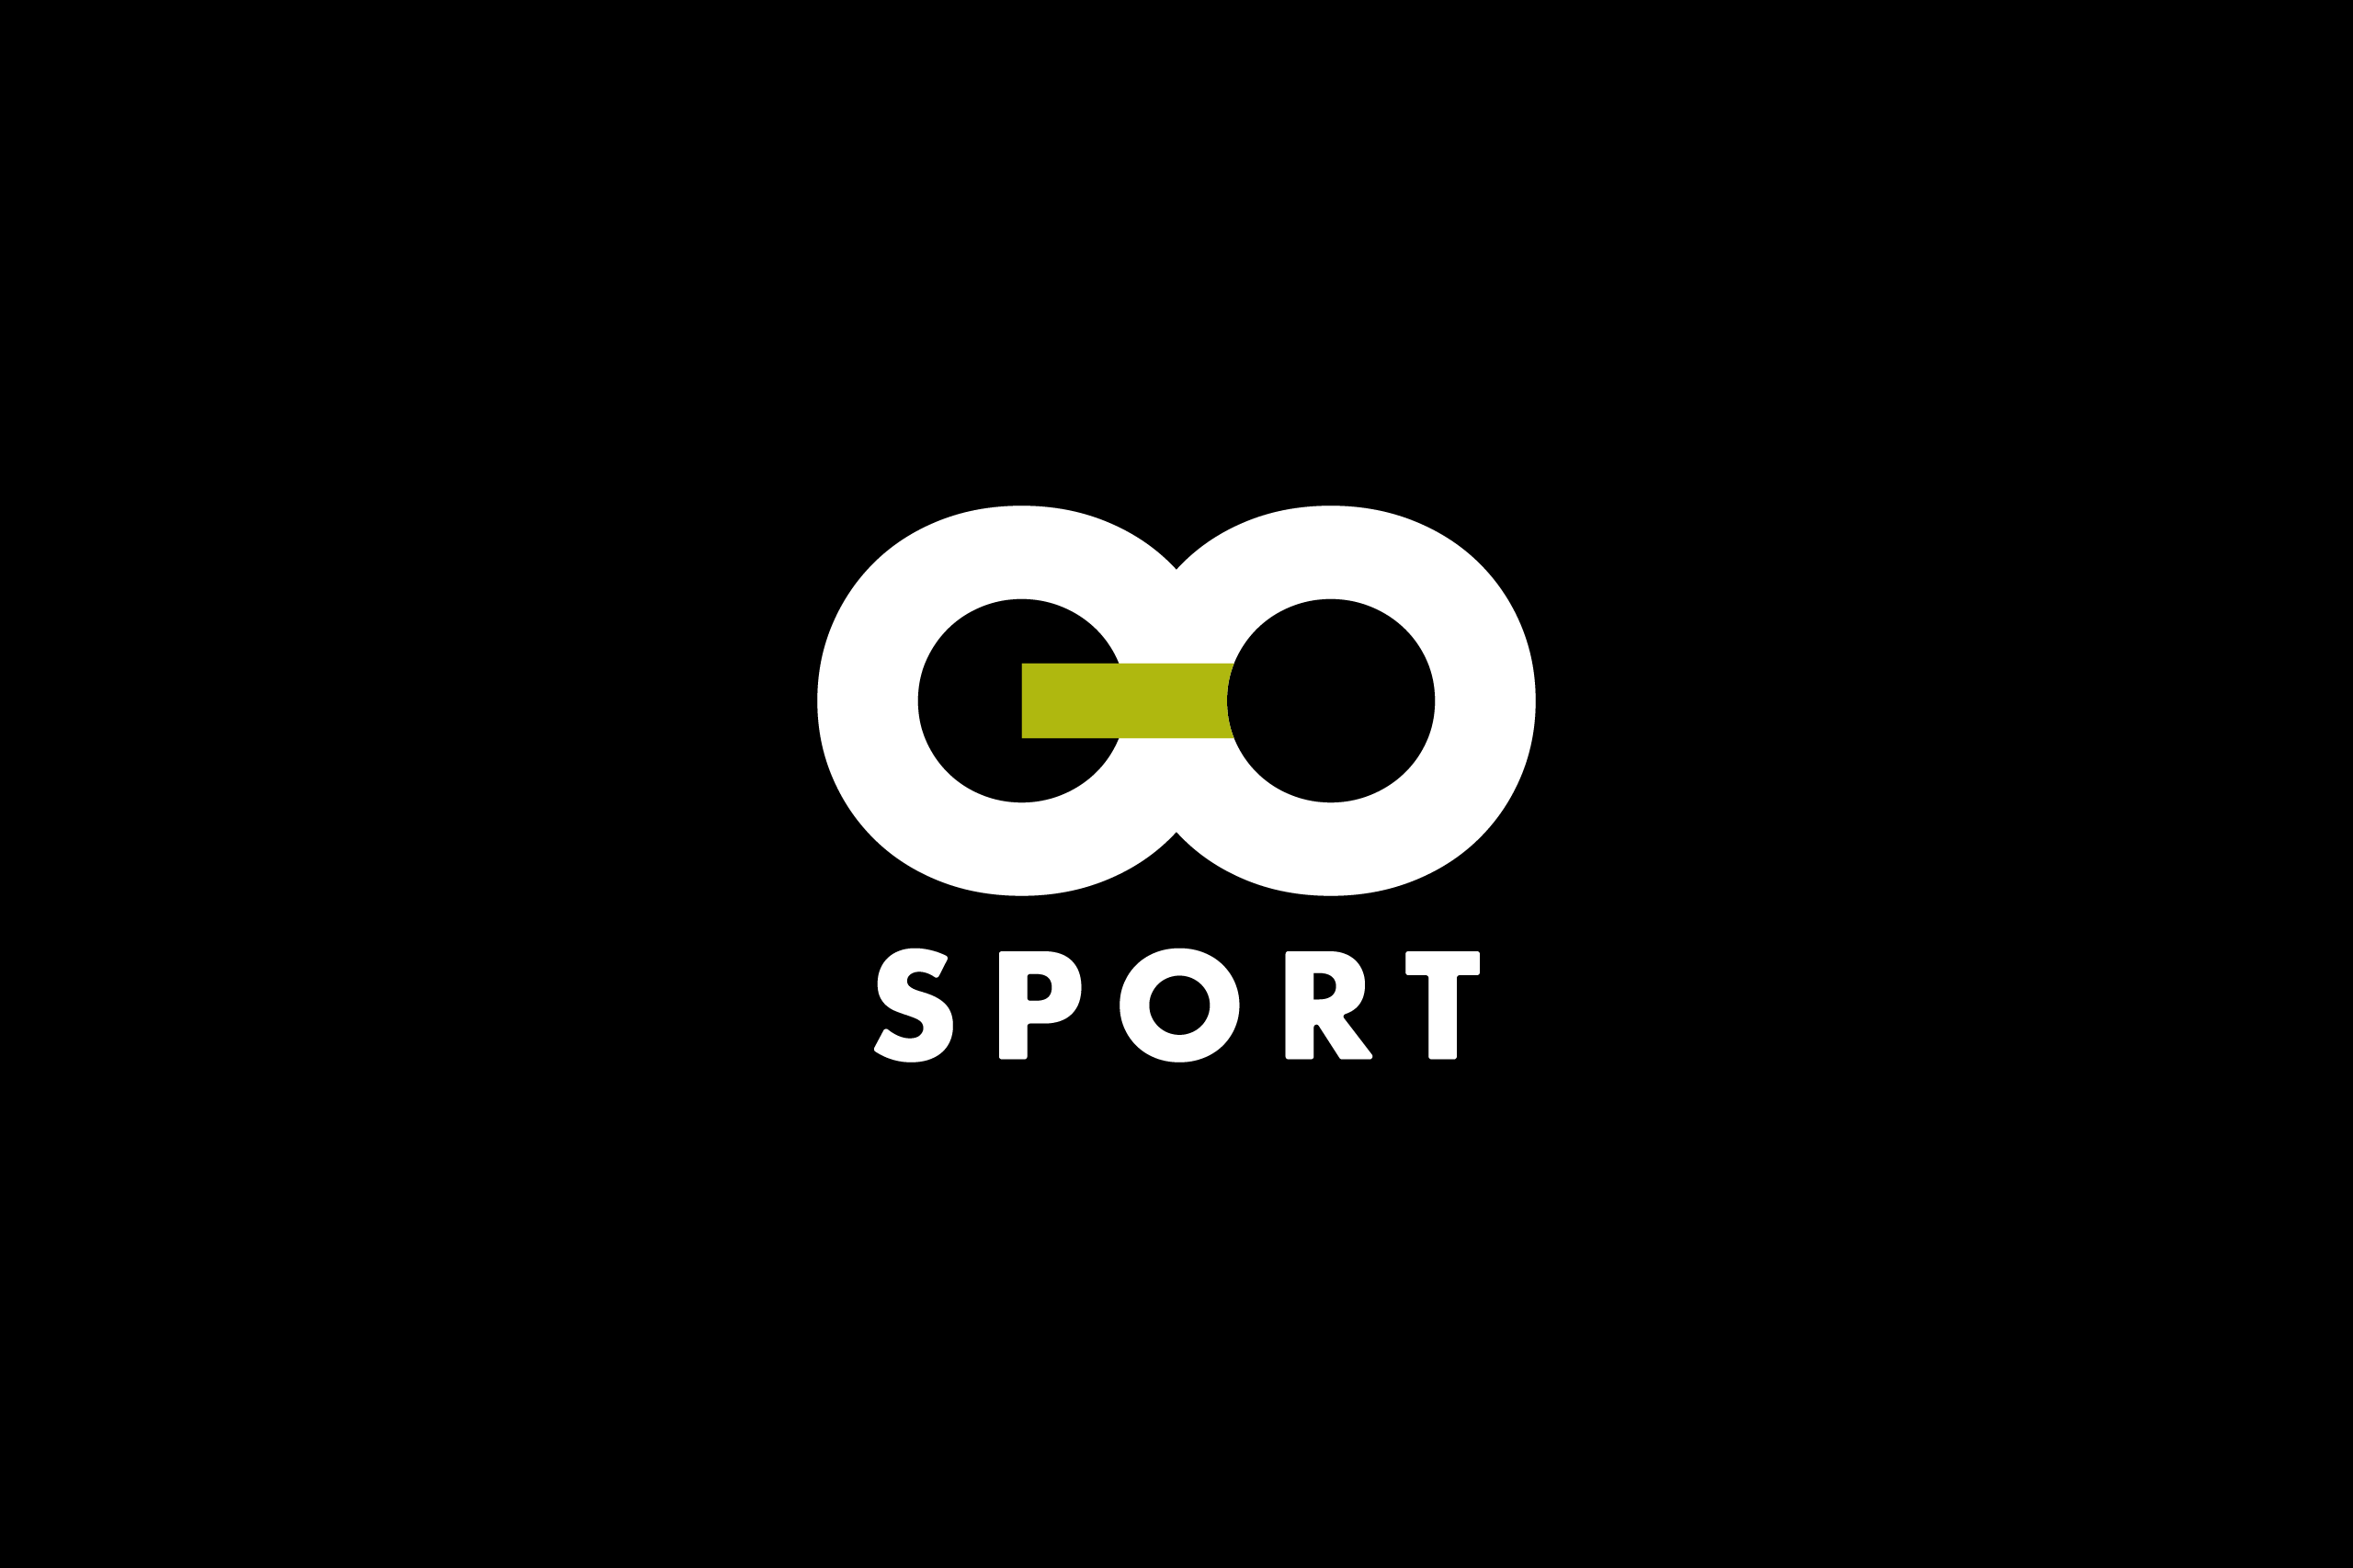 Go Sport logo redesign proposal by Xavier Wendling